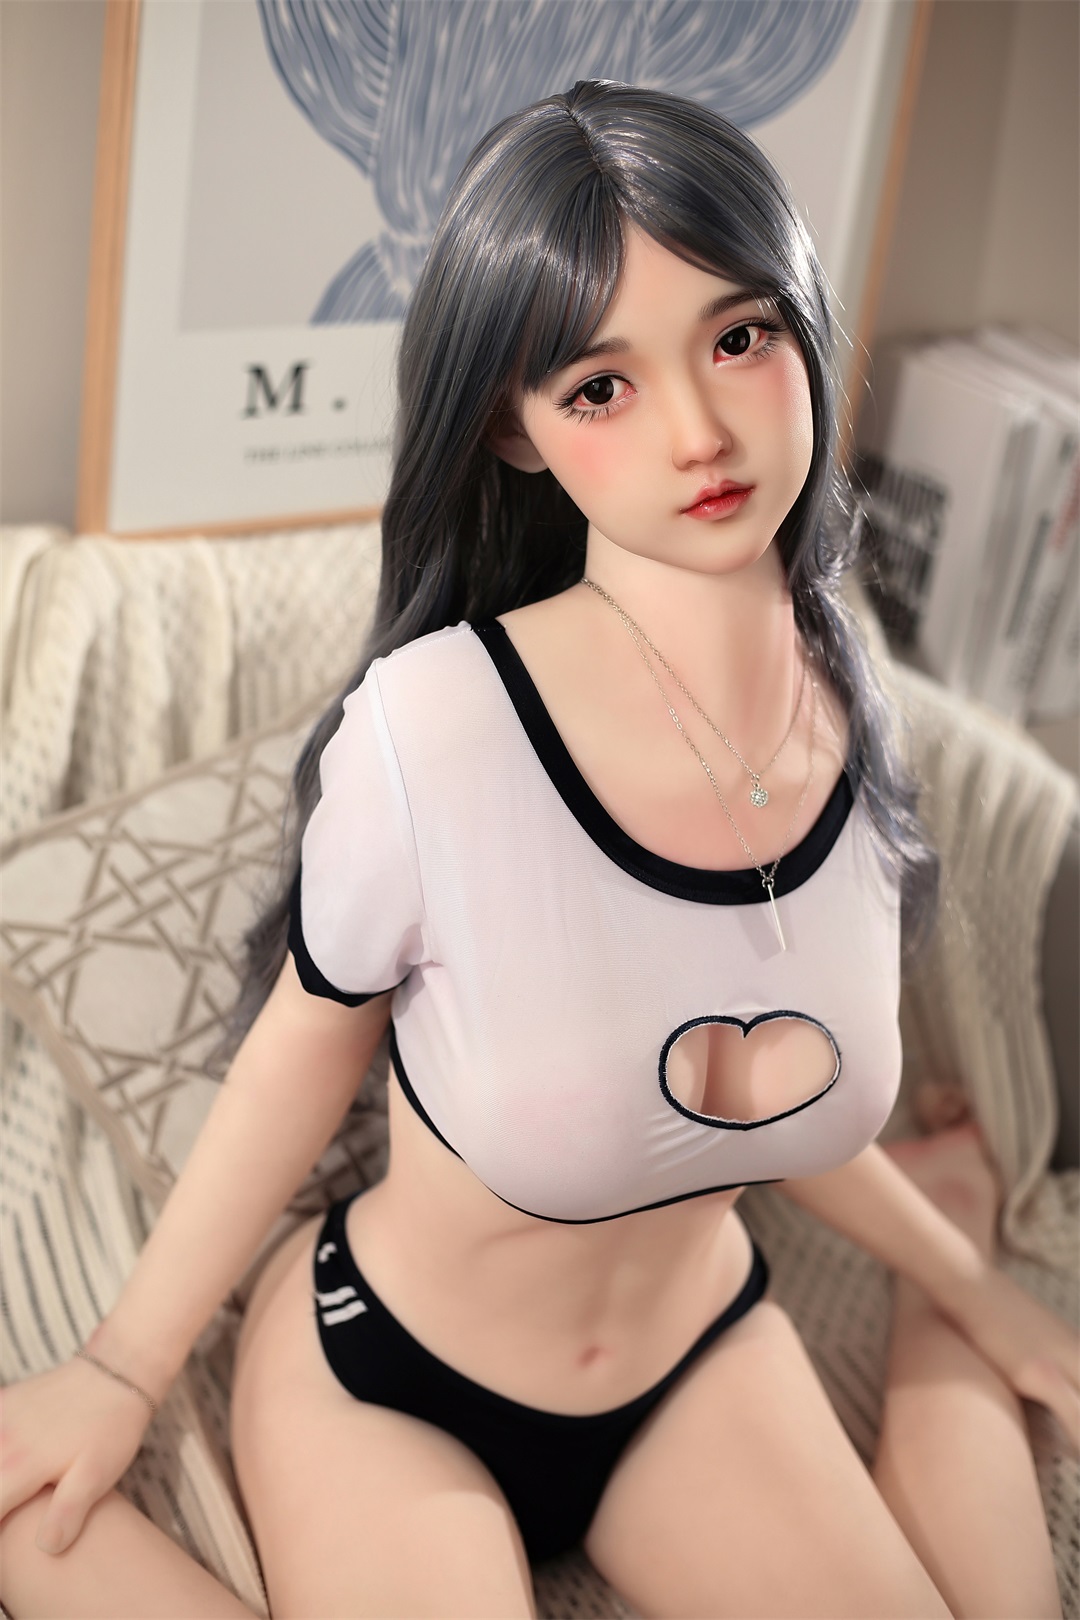 MESE Doll丨157cm(5ft 1) Small Breast Silicone Head Sex Doll - Fay